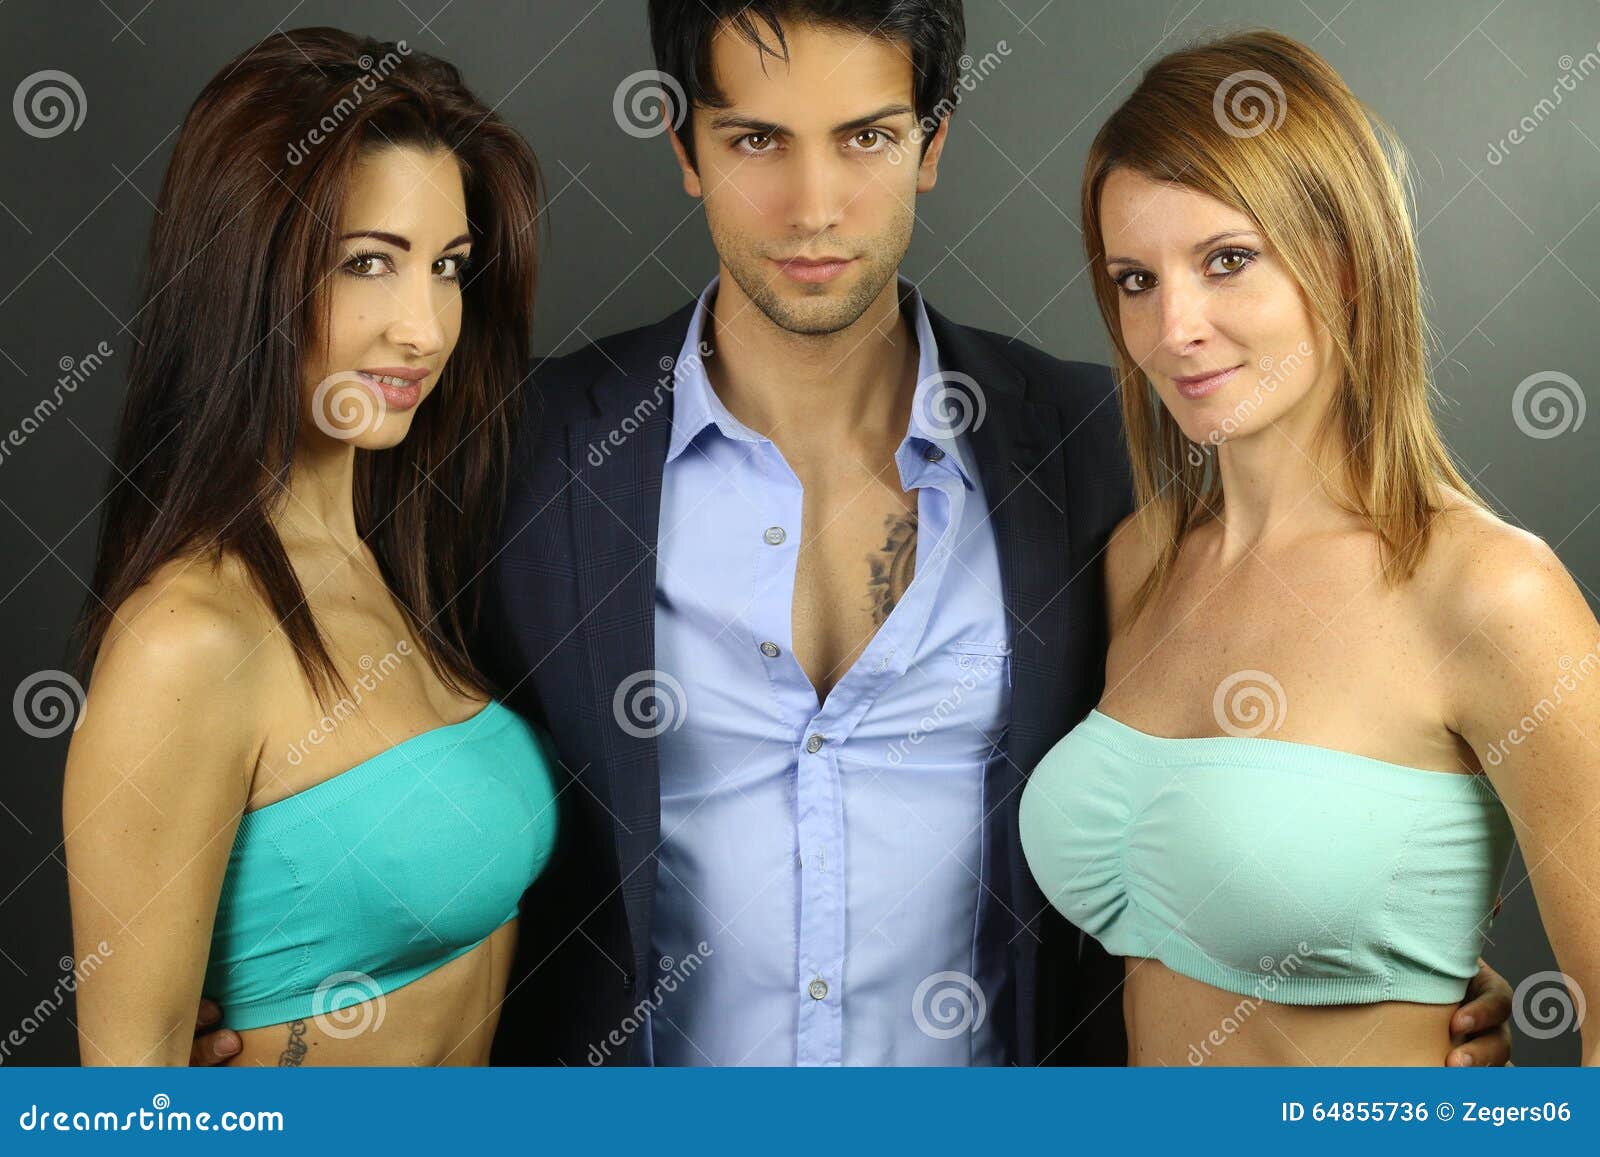 Three young swingers stock photo